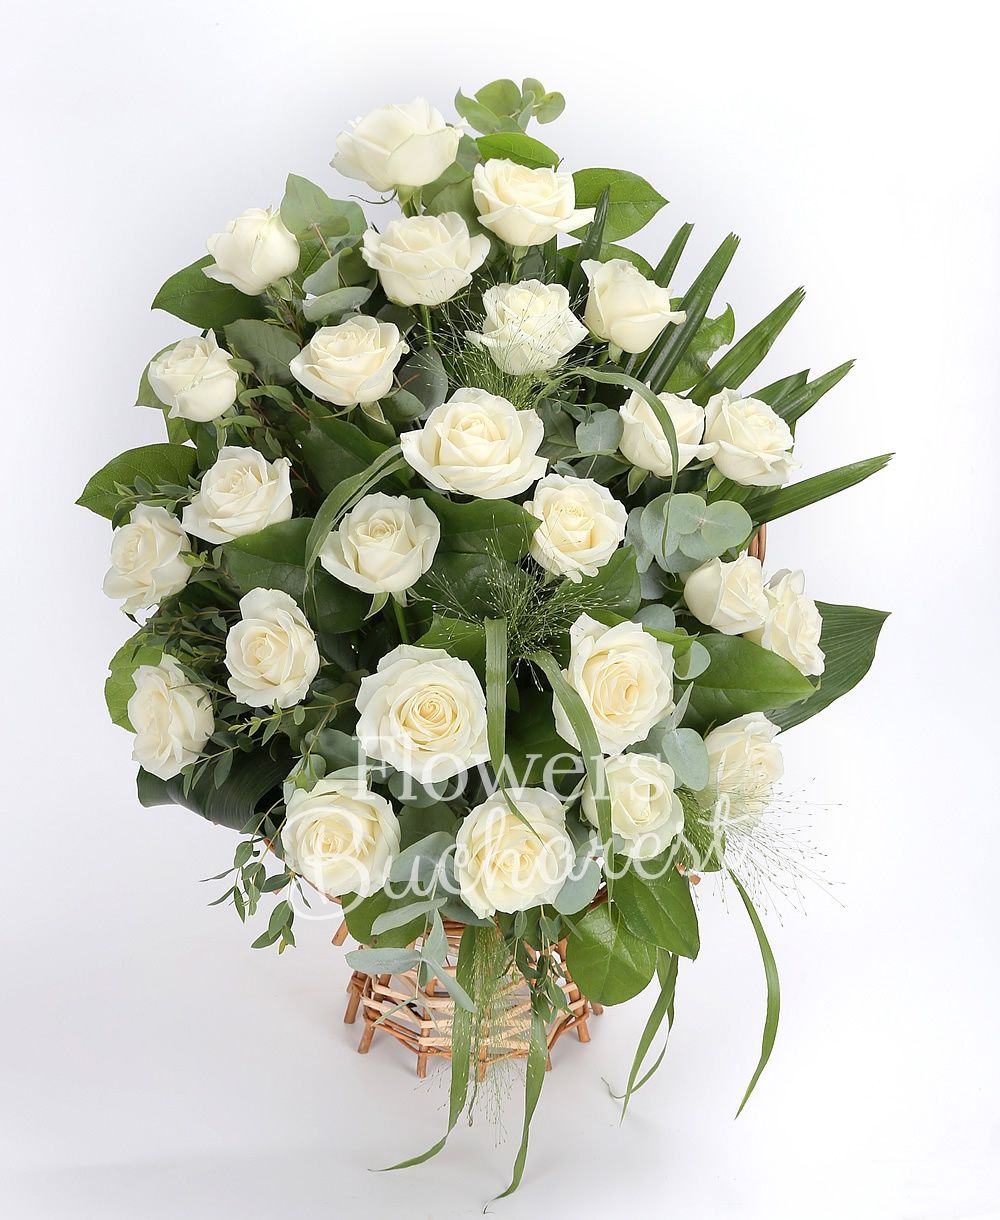 25 white roses, greenery